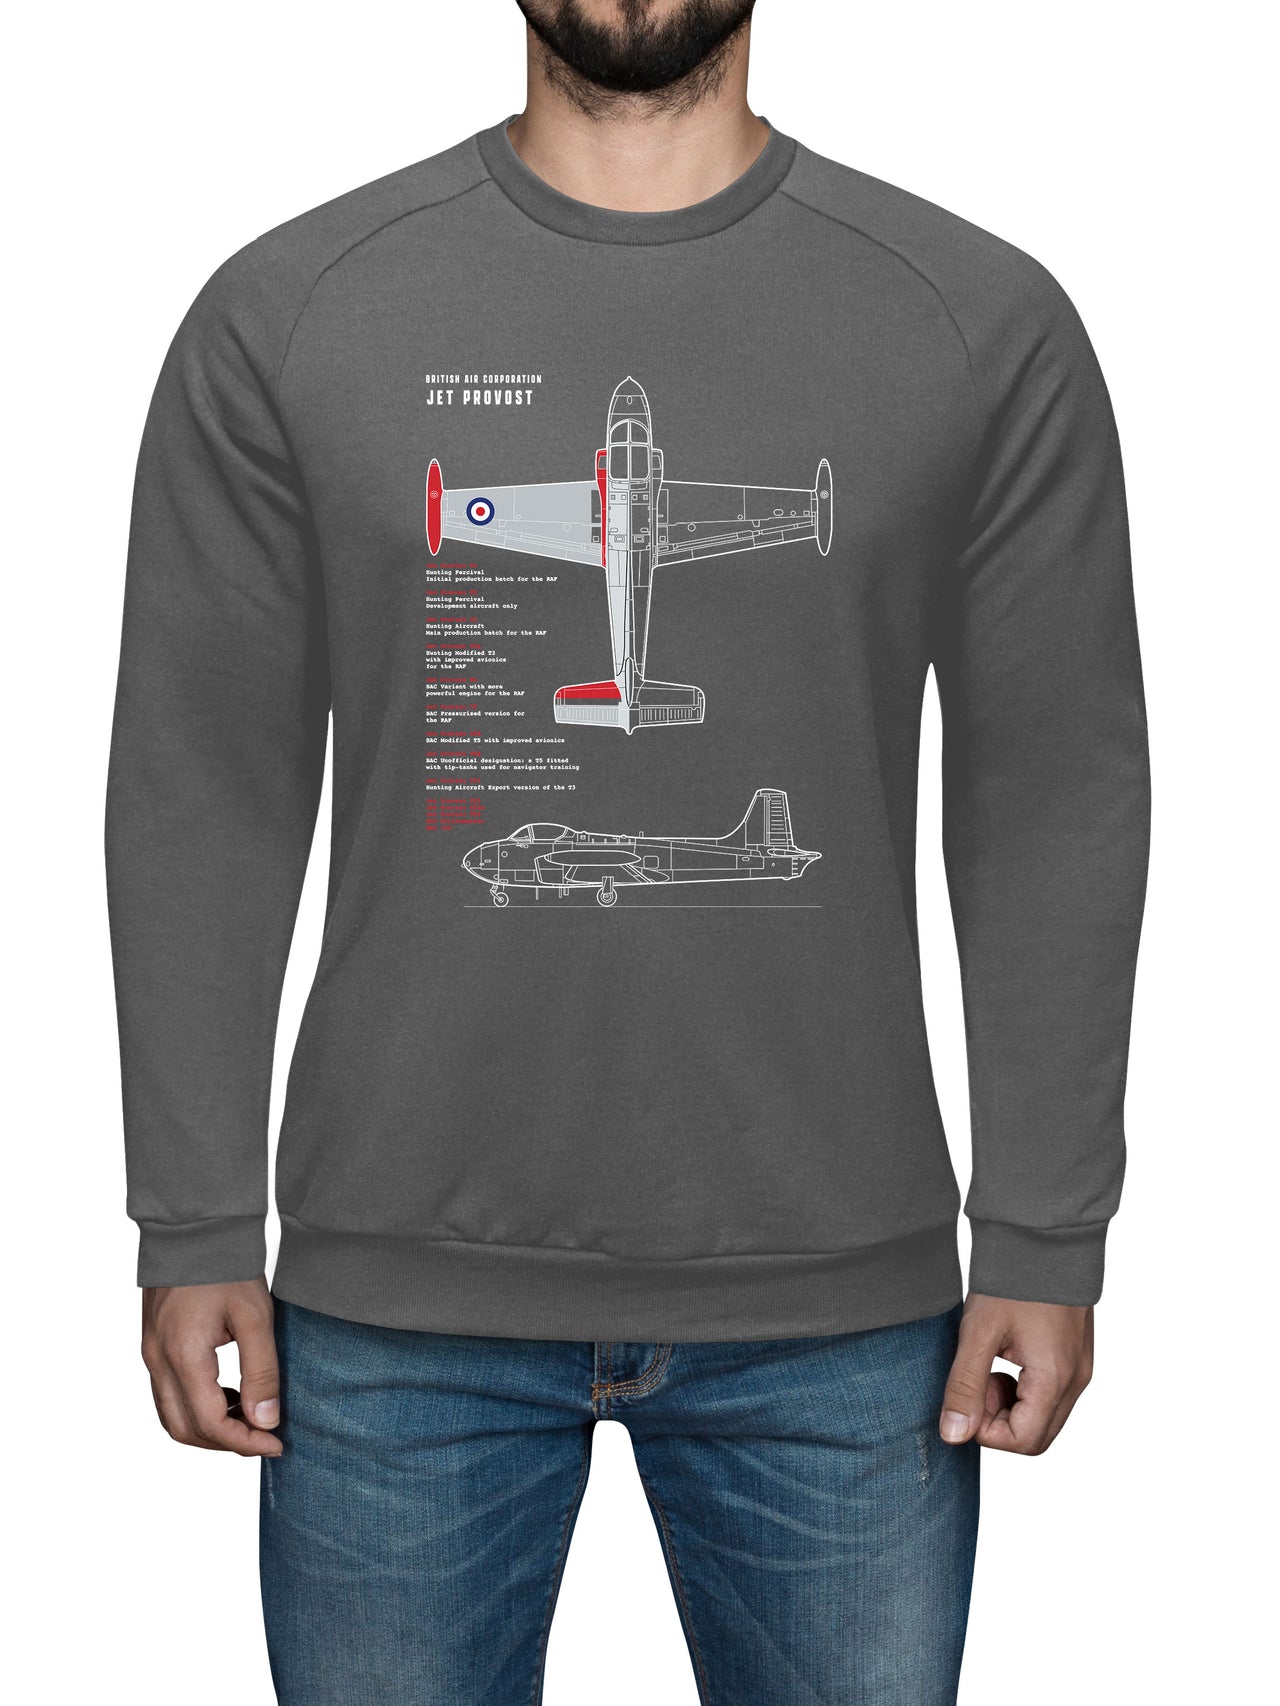 Jet Provost - Sweat Shirt